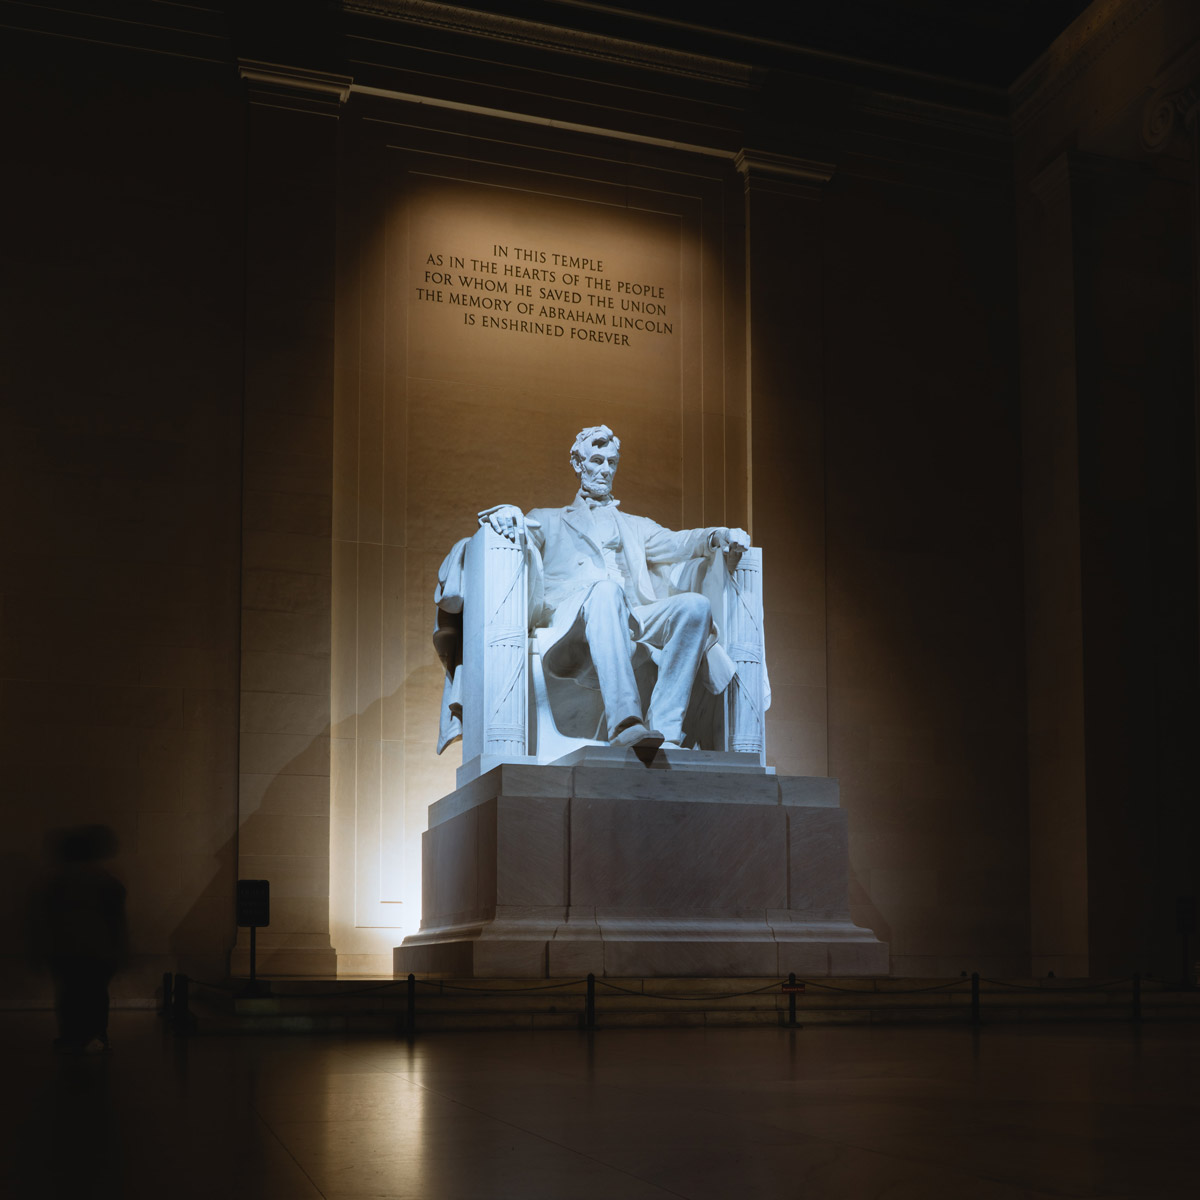 Lincoln-emlékmű | Washington | USA | OTP Travel Utazási Iroda